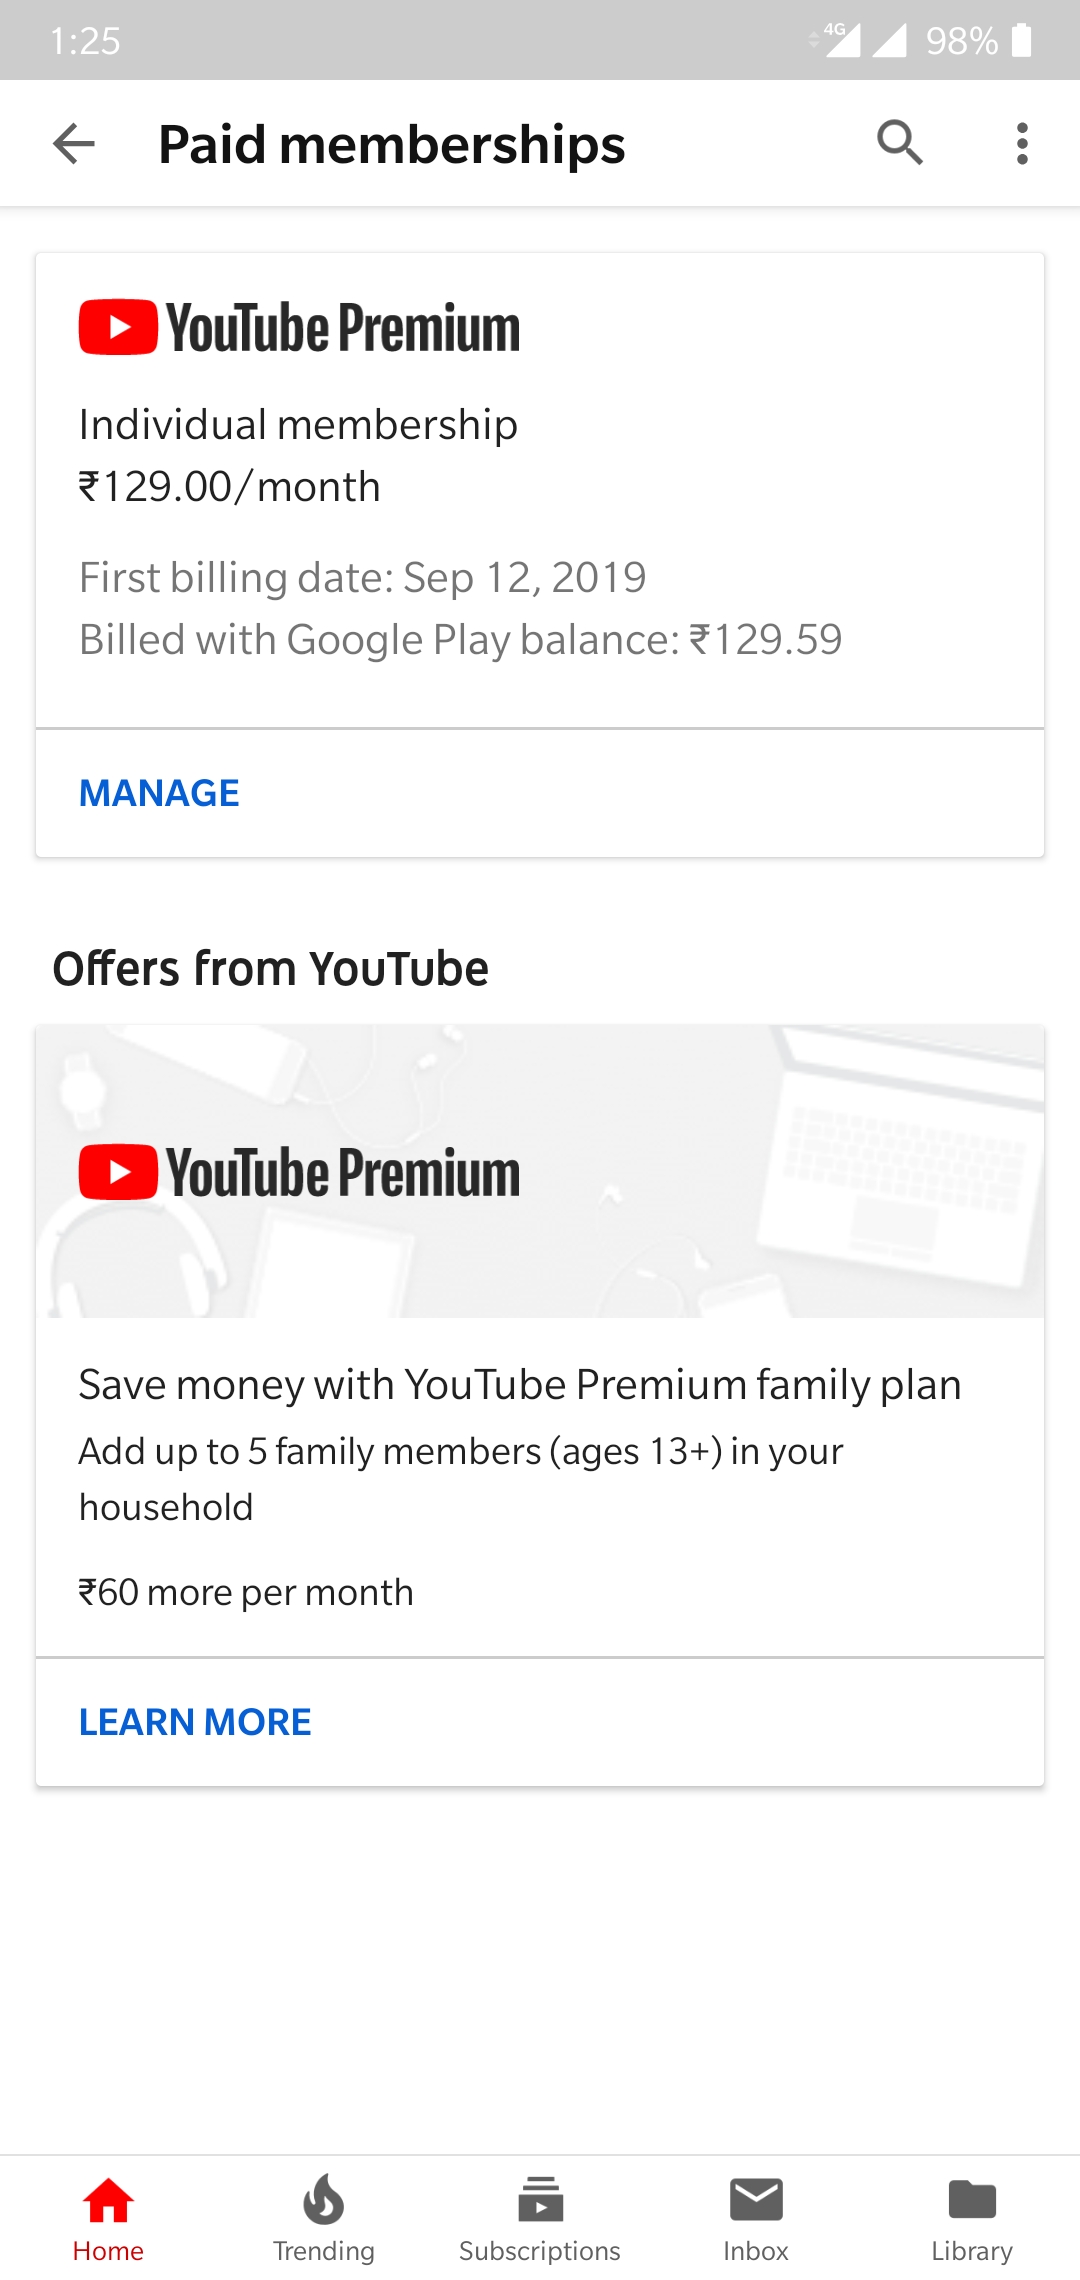 I Have 6 Months Flipkart Voucher For Youtube Premium But When I